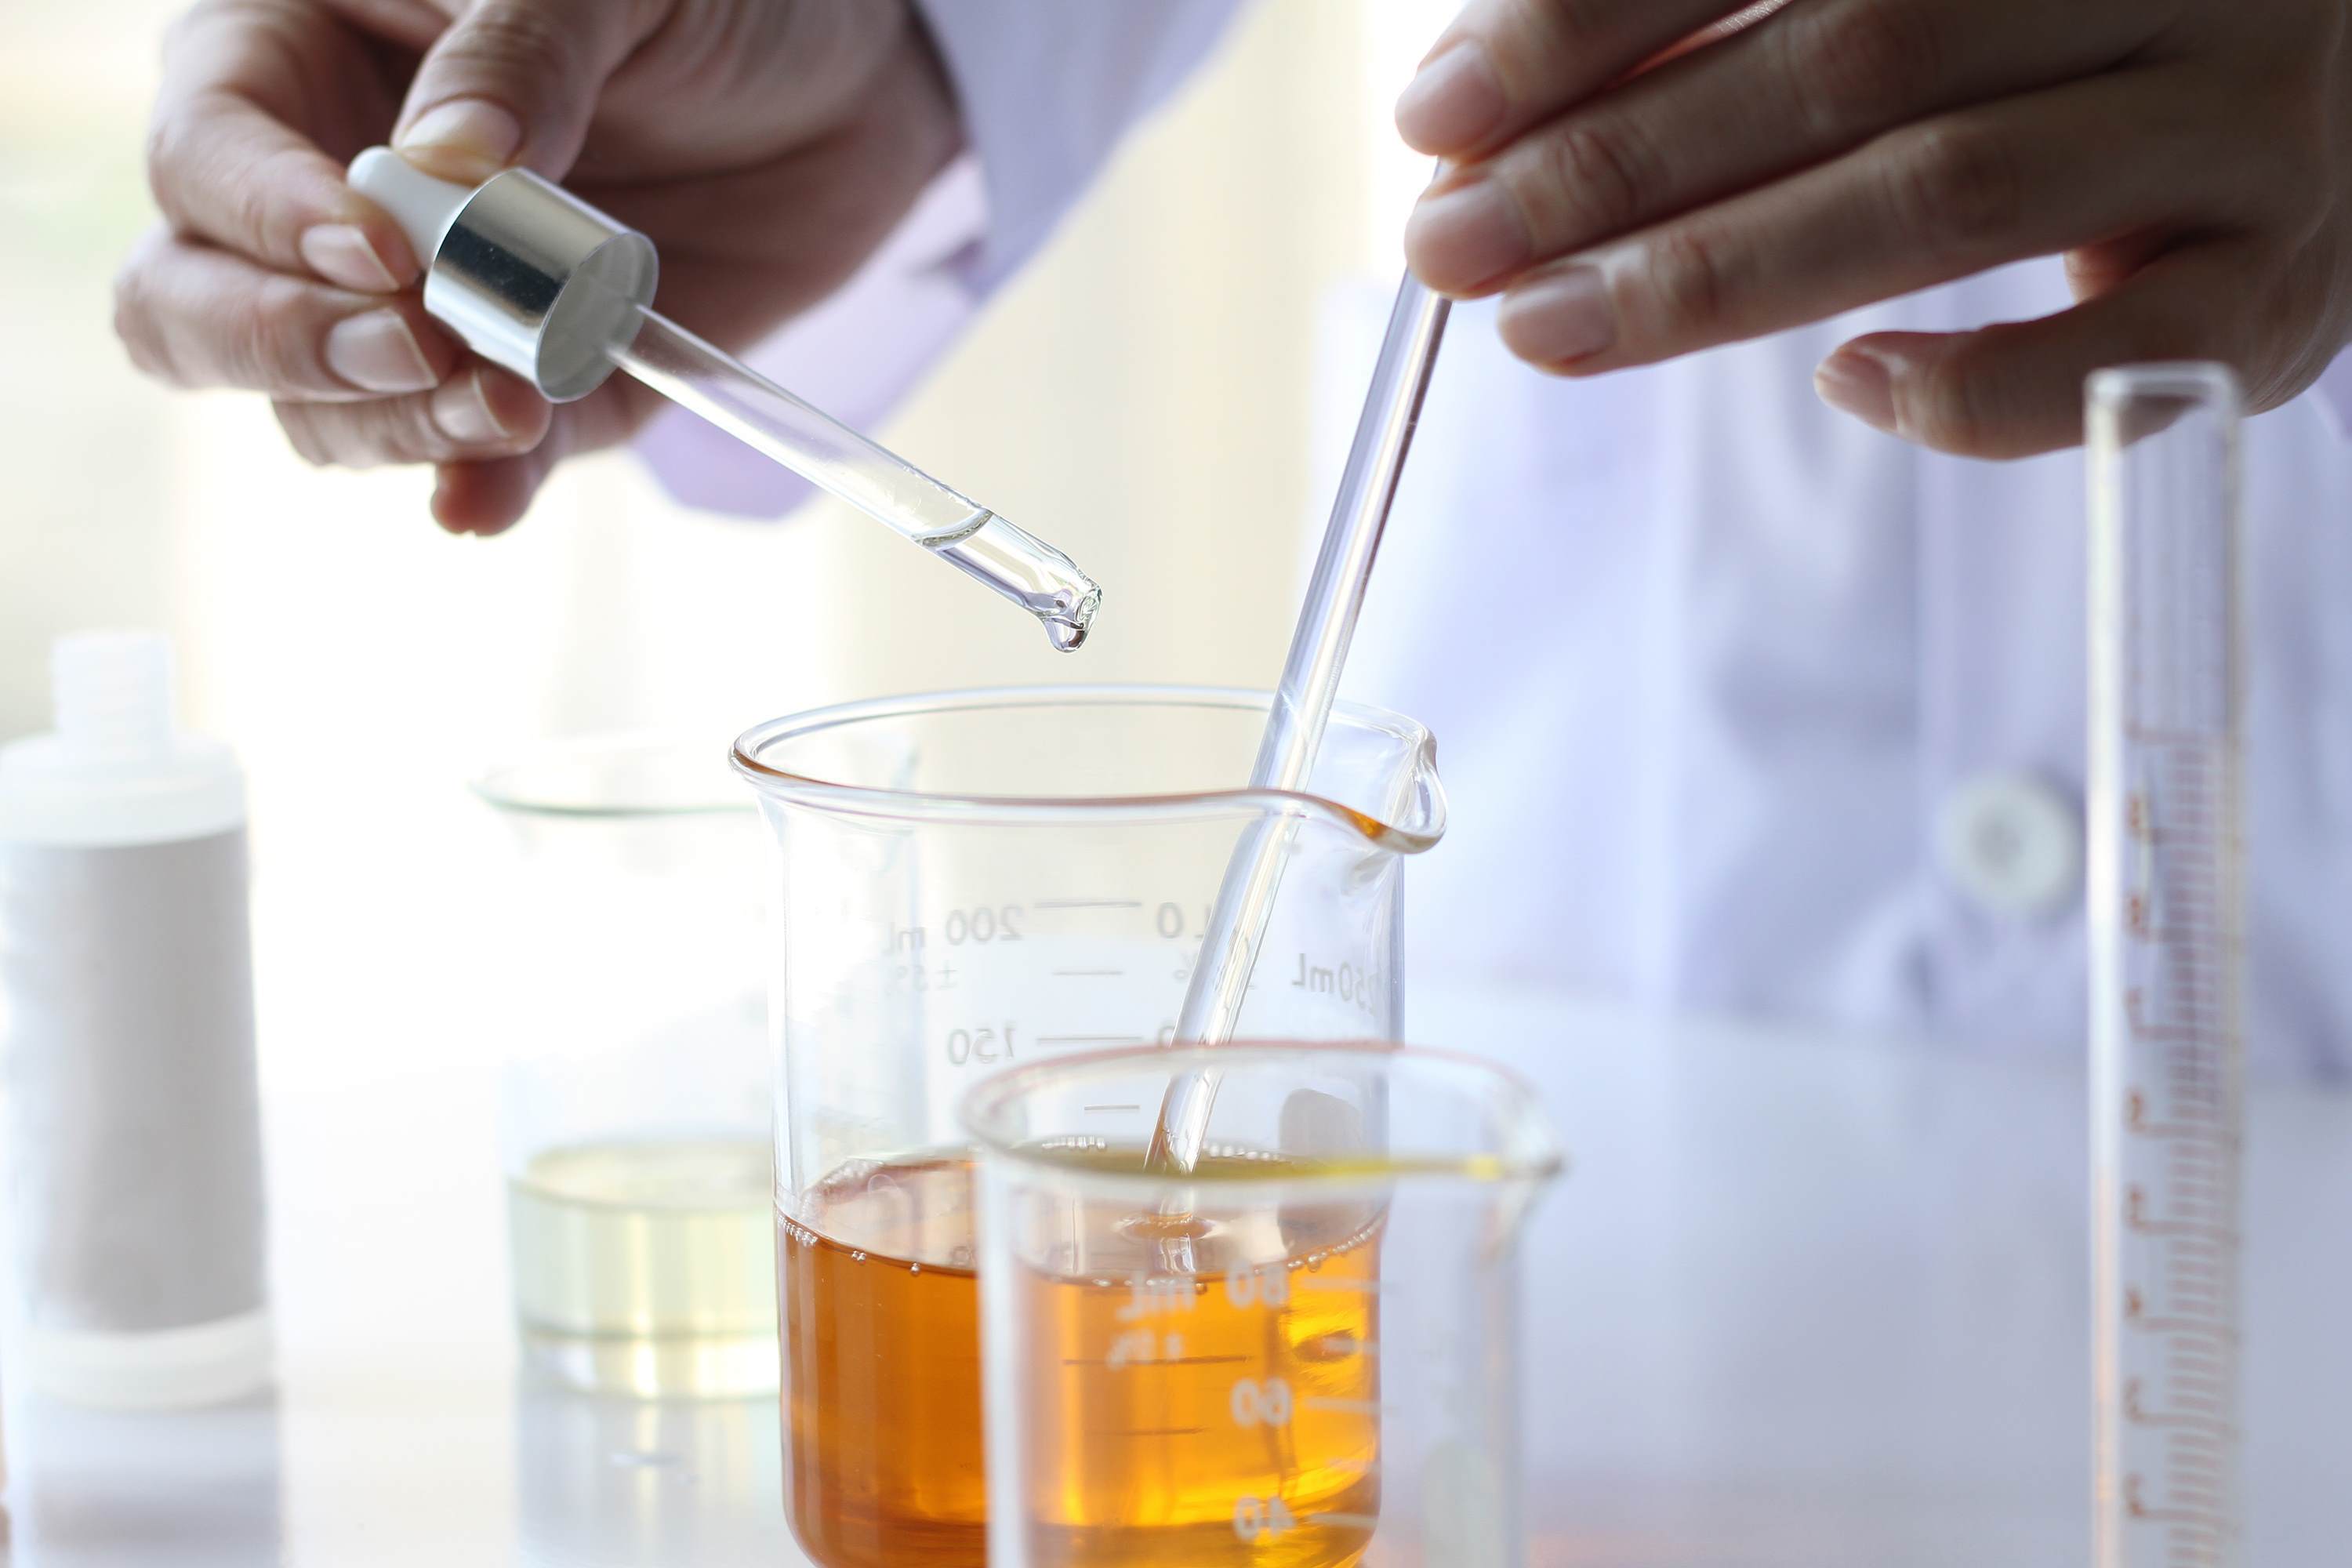 Formulation lab testing products